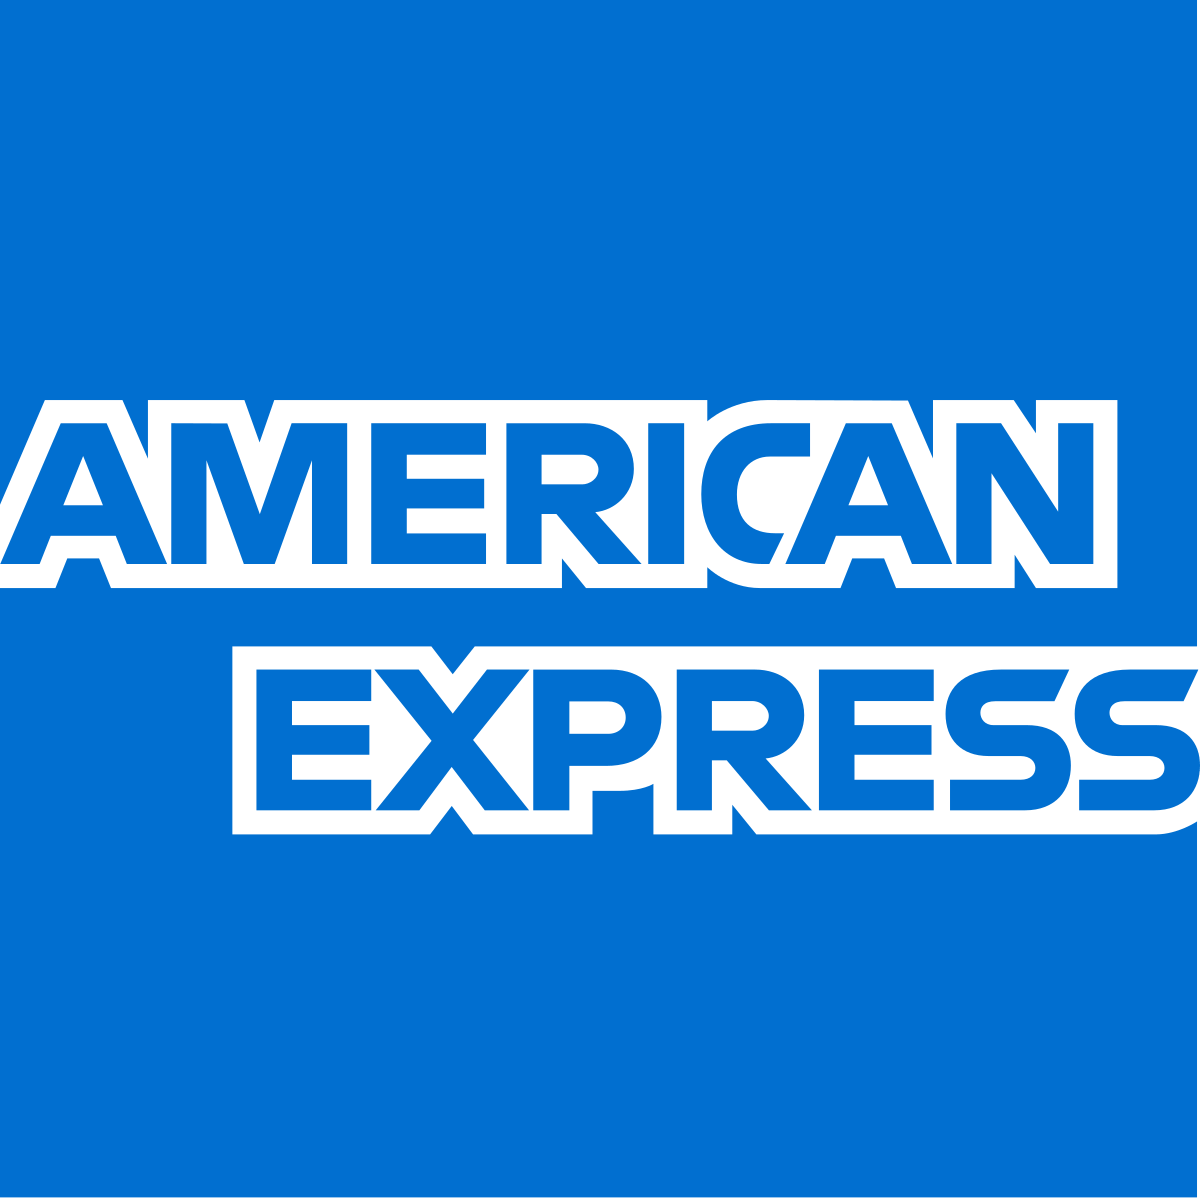 emerican-express_logo.png